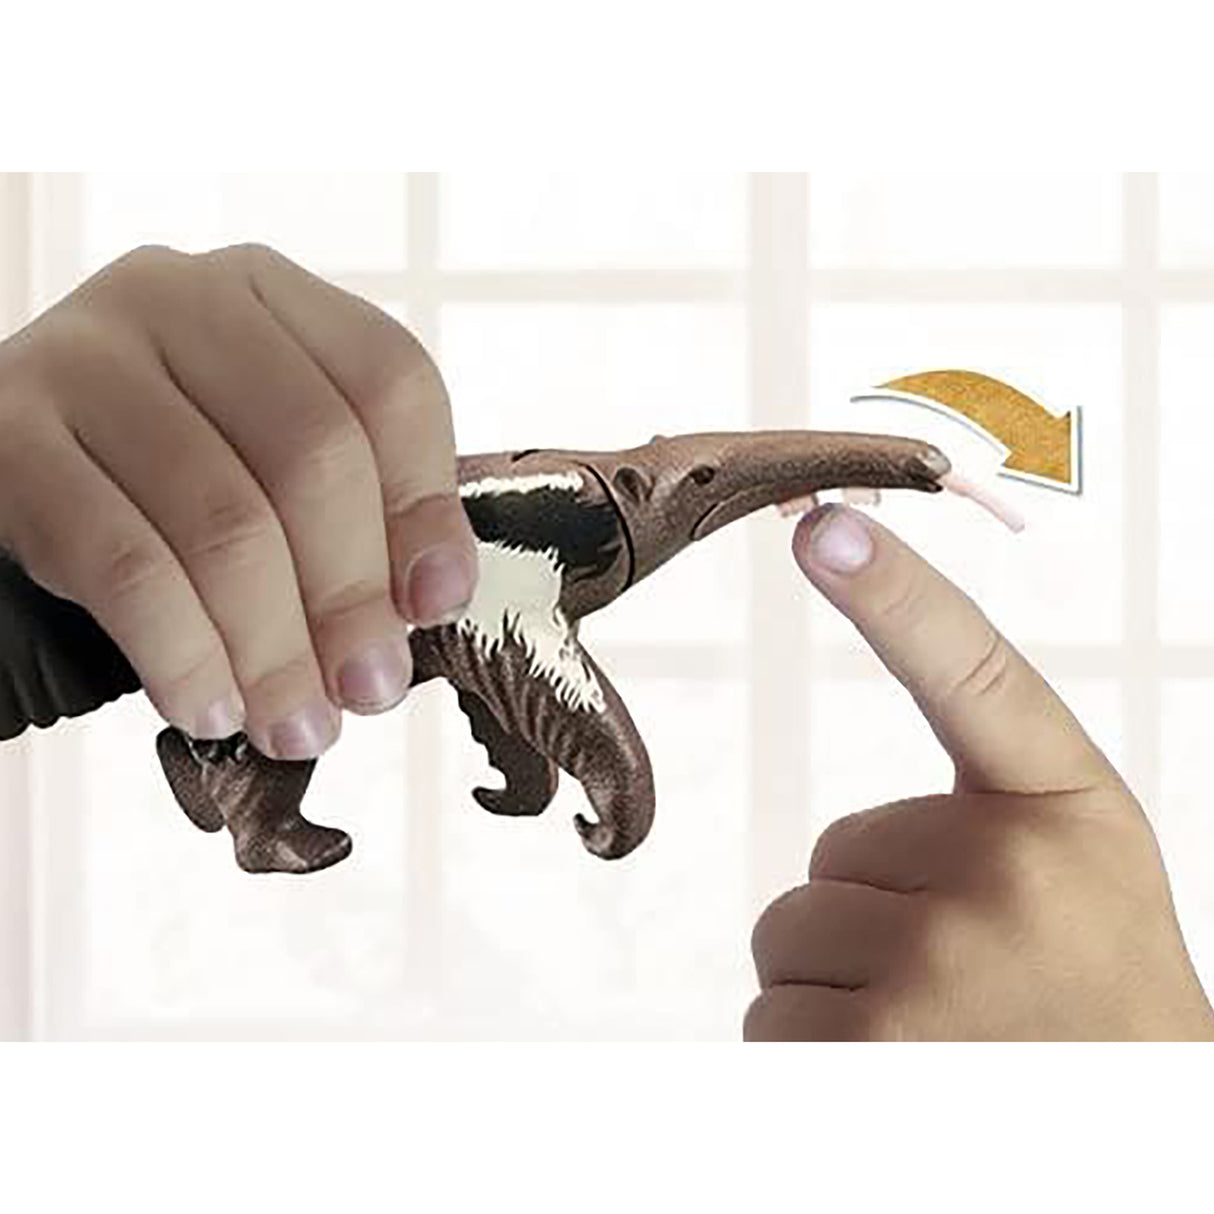 Playmobil Anteater Care (39 pieces)